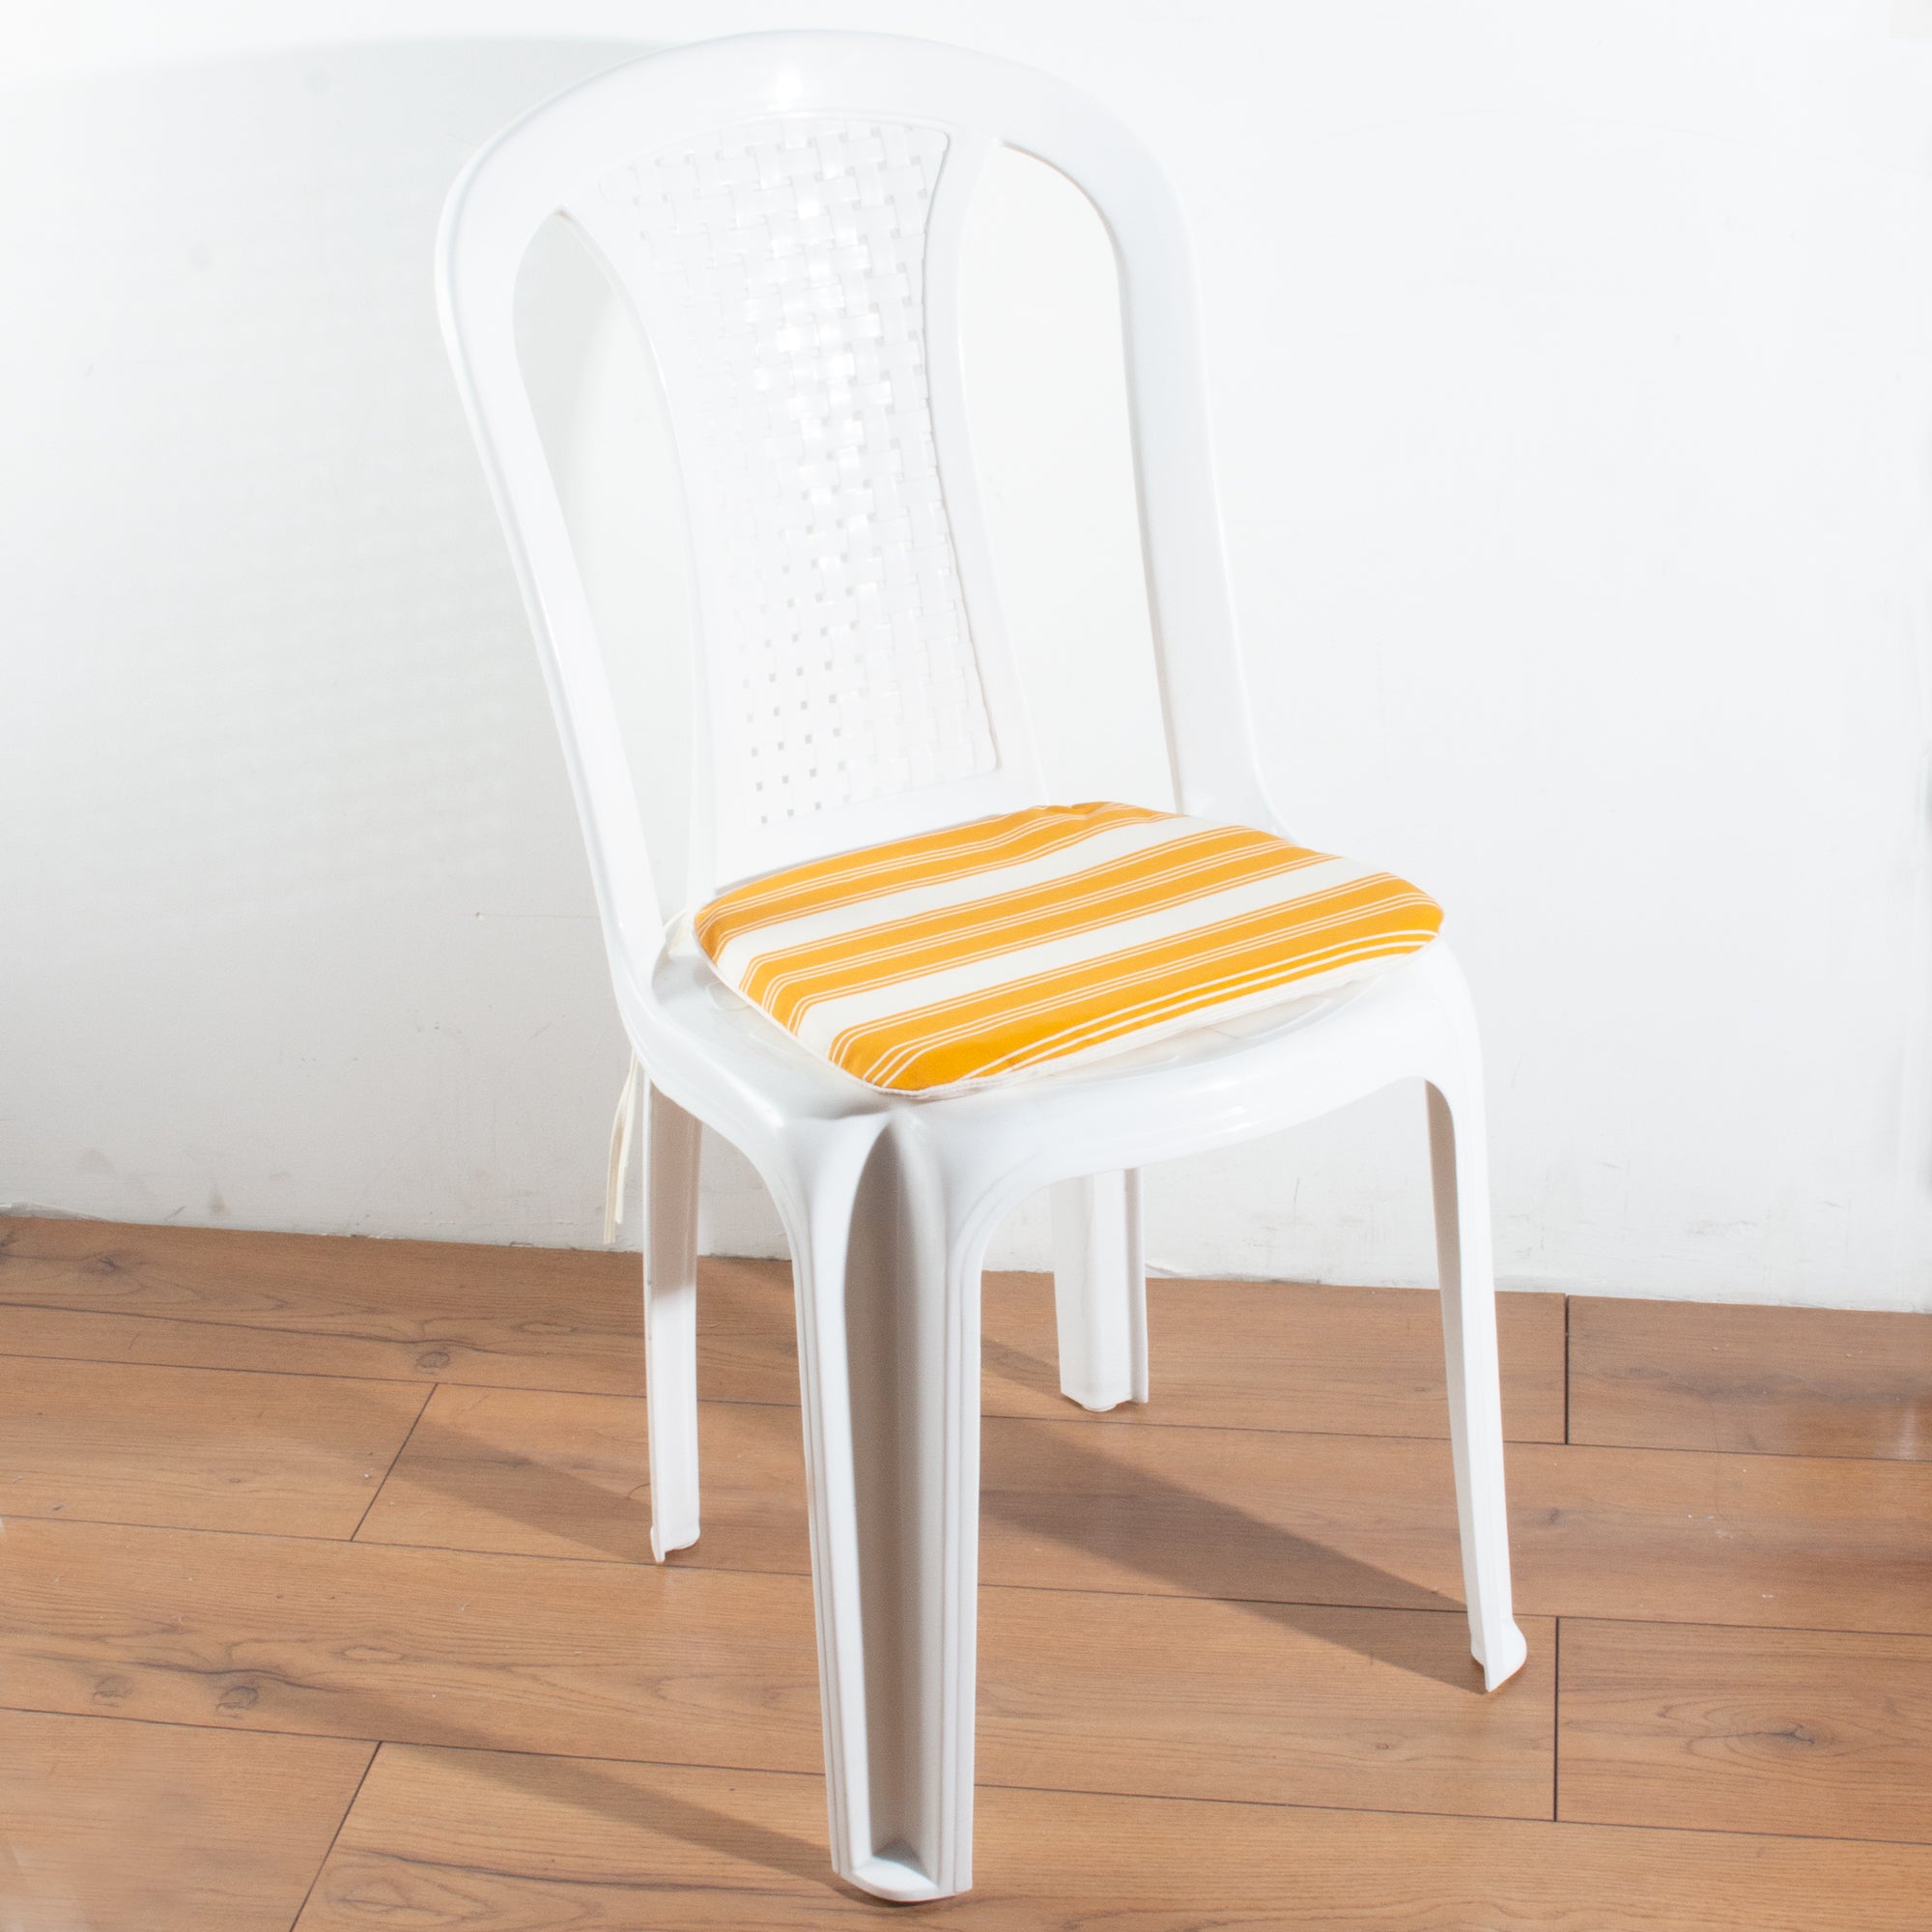 Cojín para silla rimax o similar en tela de algodón/poliester y espuma flexible sintética de poliuretano tipo poliéter de celda abierta. Para uso en exteriores e interiores.